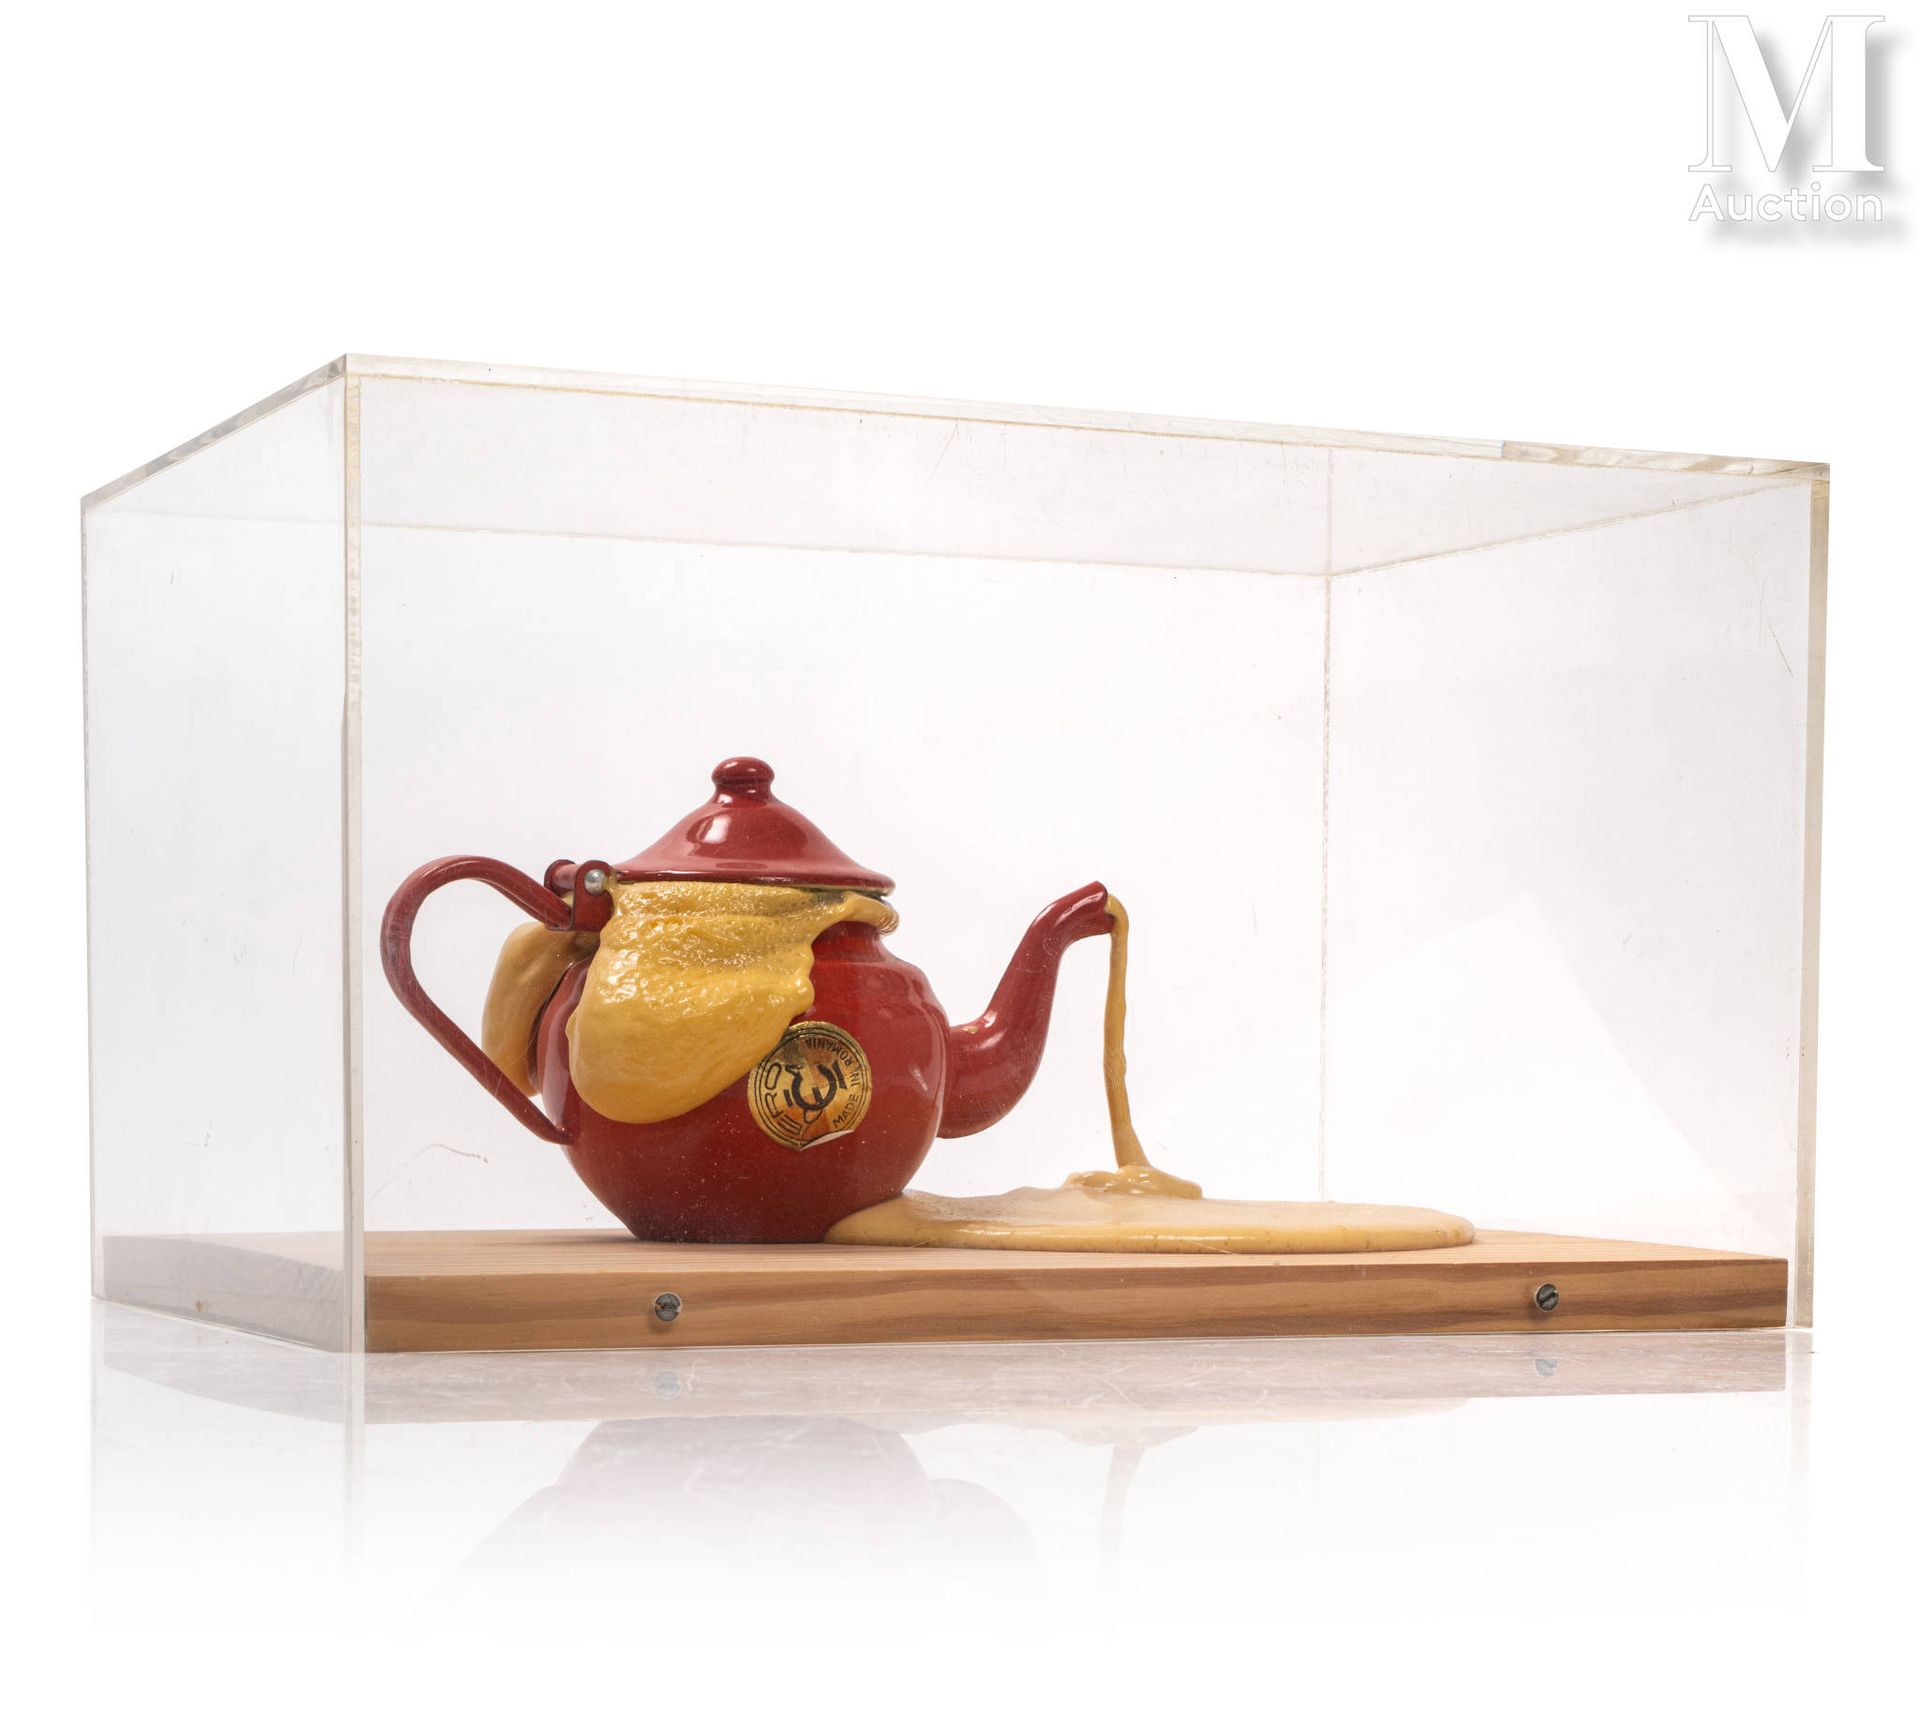 César (1921-1998) Expansion teapot, 1970

Teapot in metal and polyurethane expan&hellip;